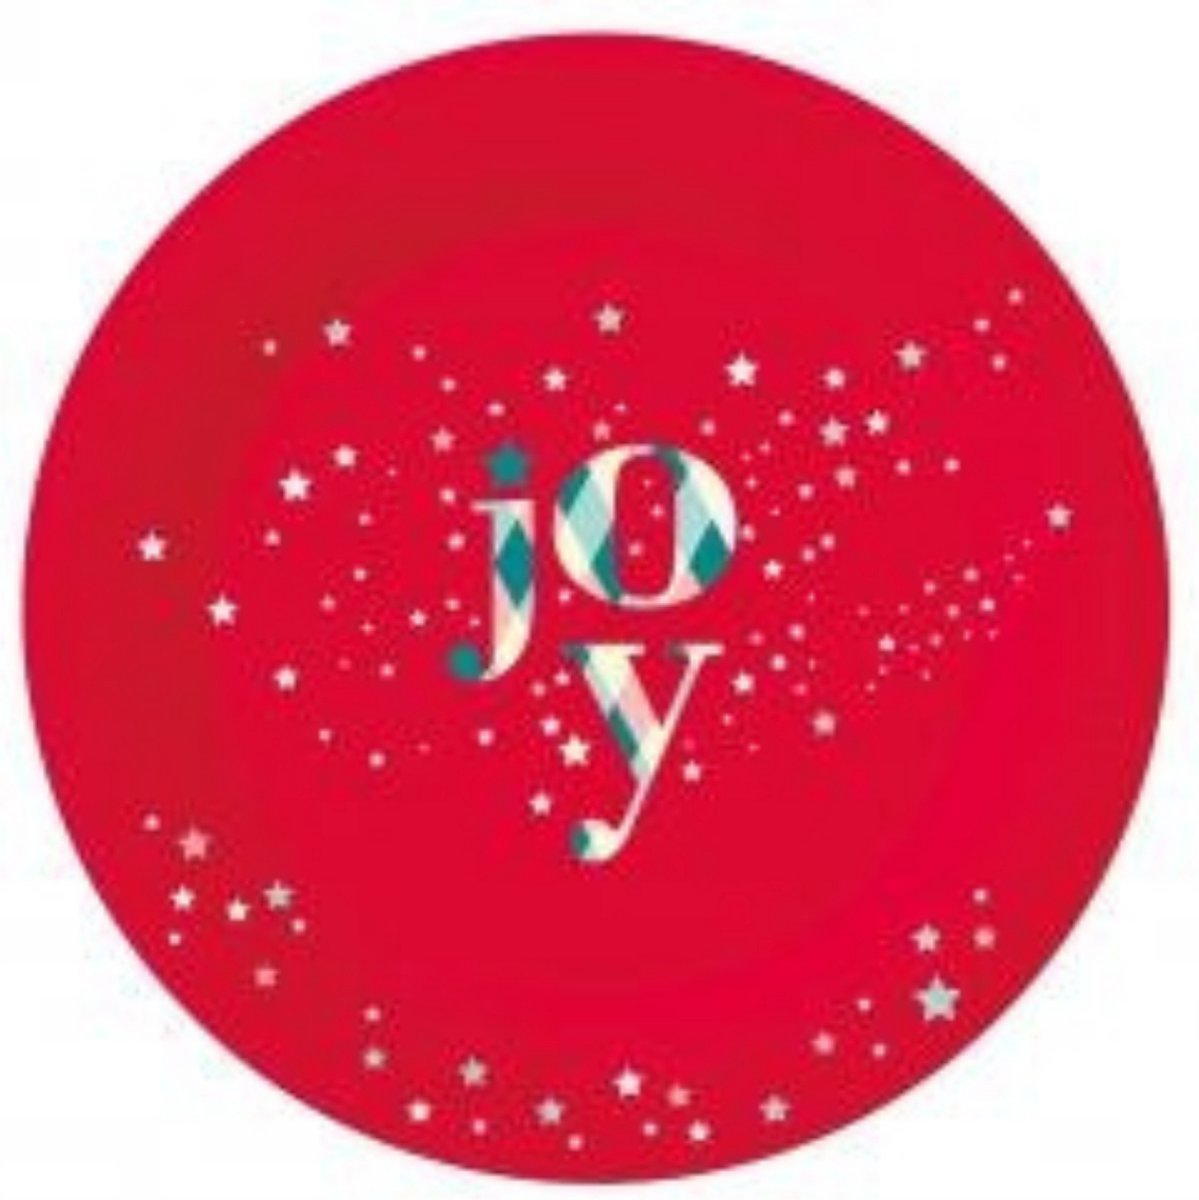 Kerst bordjes - Joy met sterretjes - Rood - 6 stuks